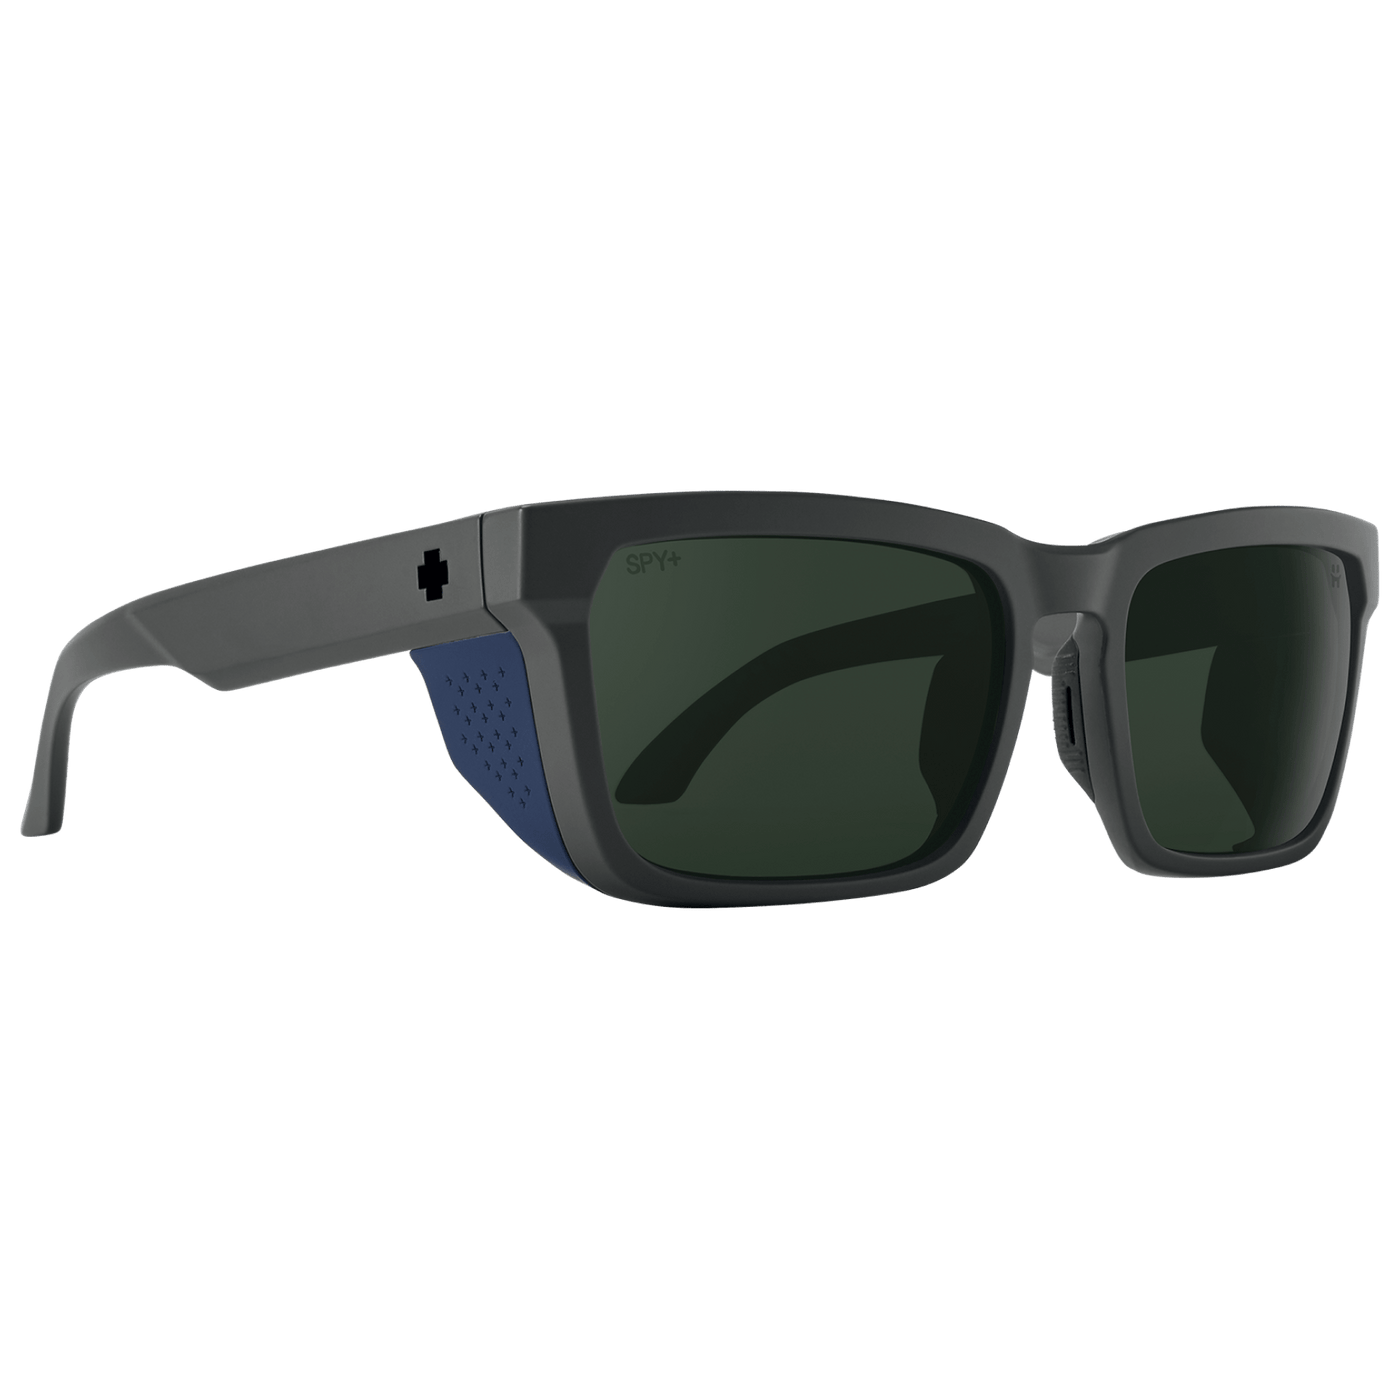 SPY HELM TECH Sunglasses, Happy Lens - Gray/Green